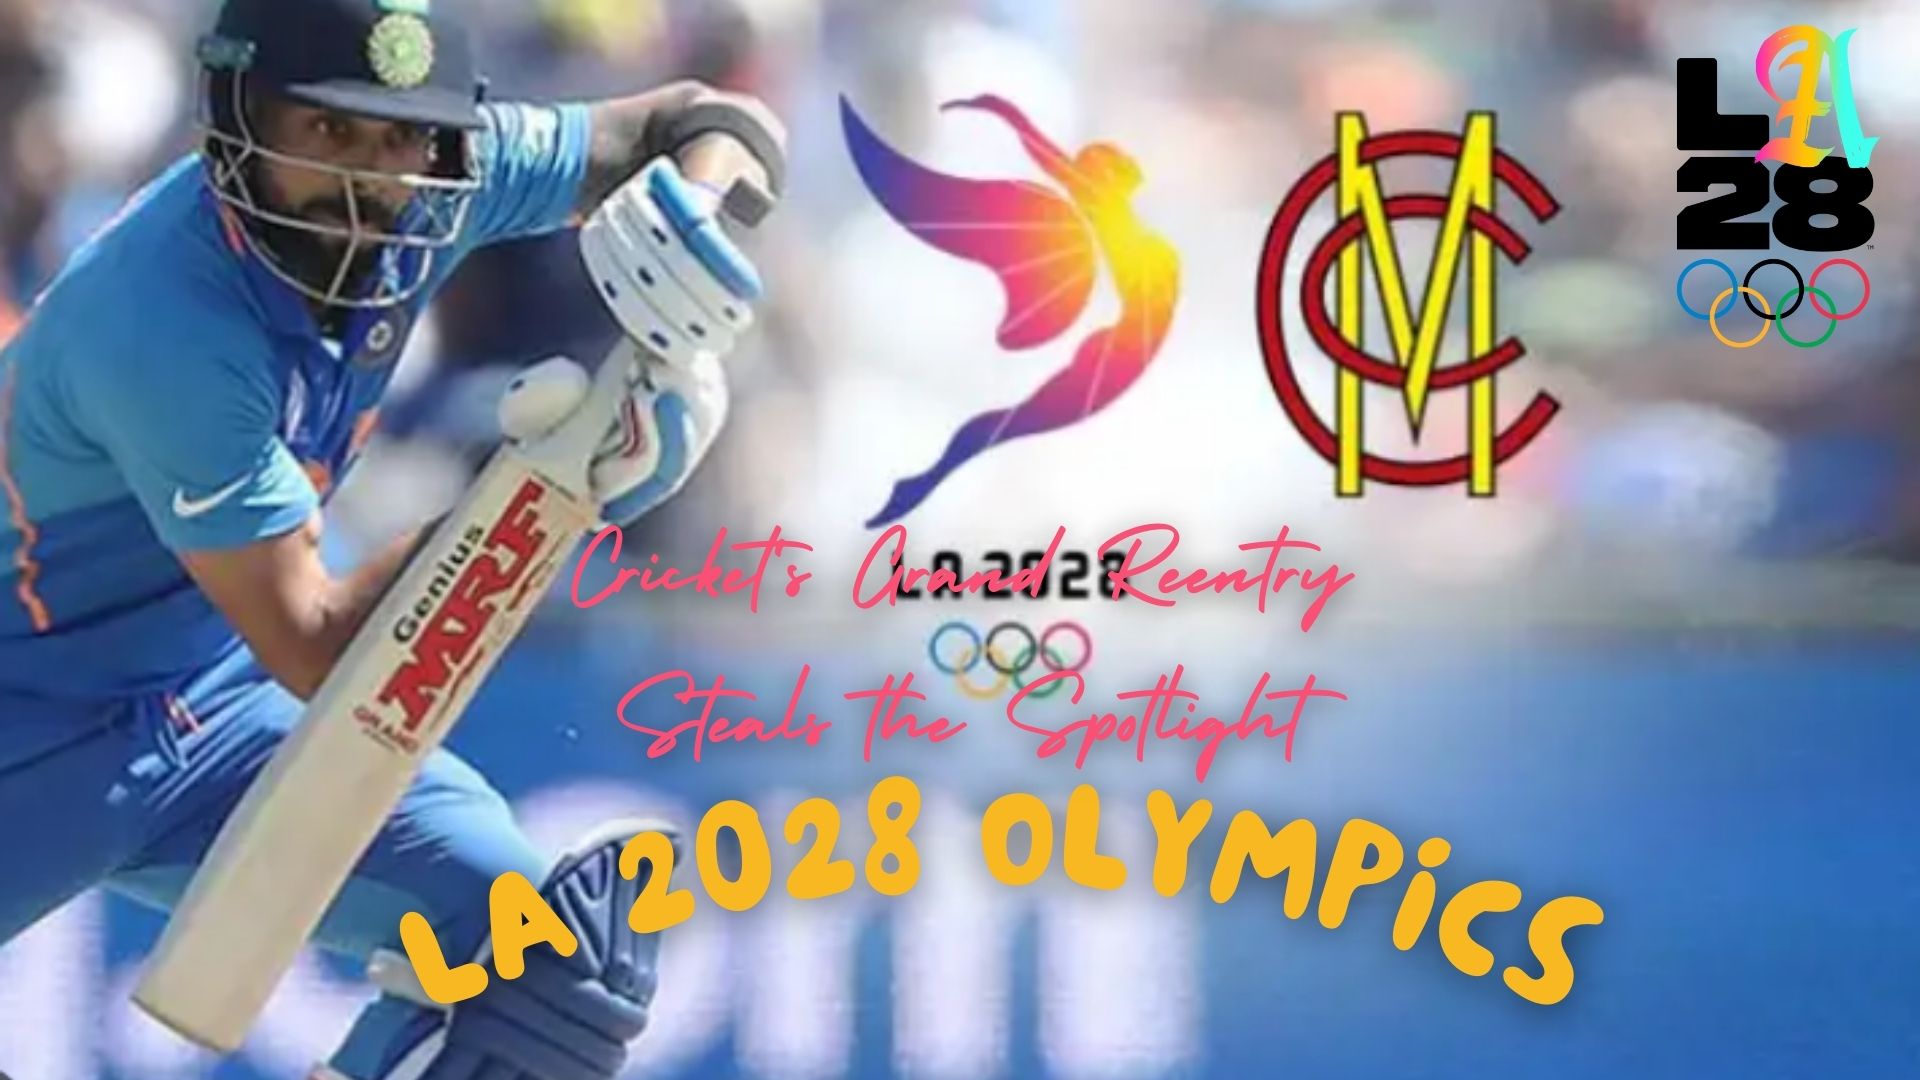 (Video)LA 2028 Olympics: Cricket's Grand Reentry Steals the Spotlight